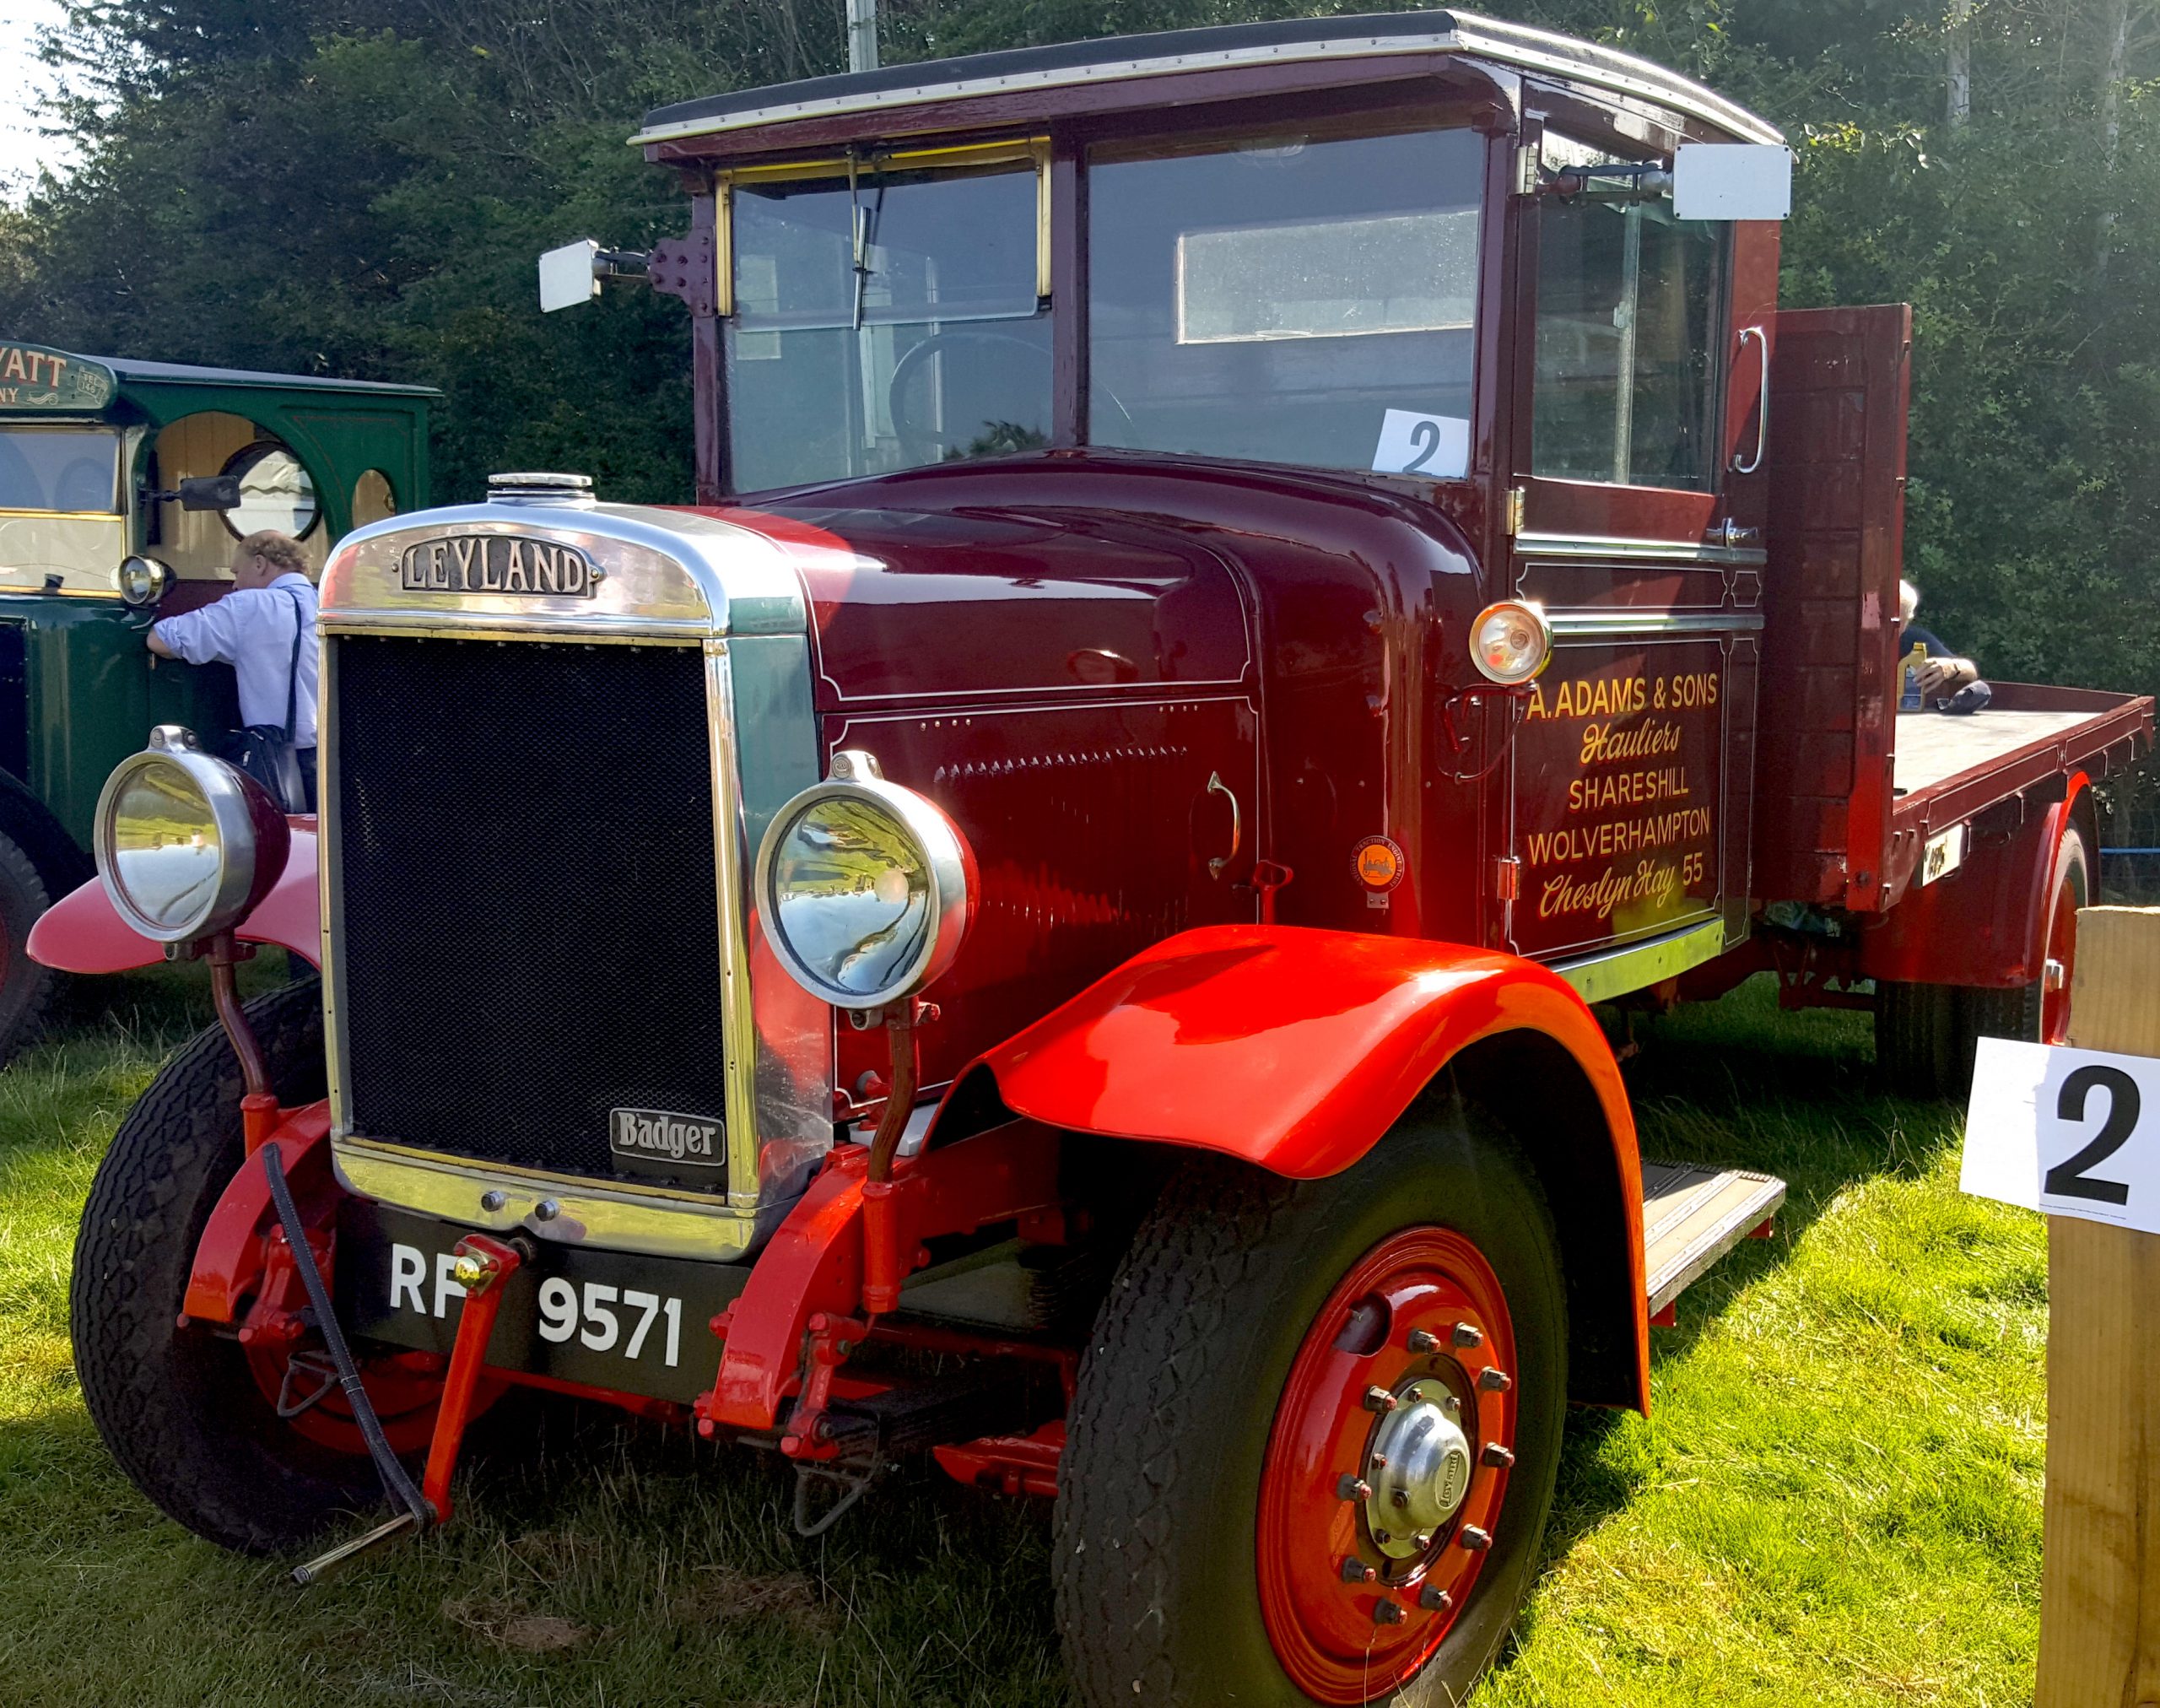 A-Adams-Sons-Vintage-Leyland-Badger-Truck-scaled